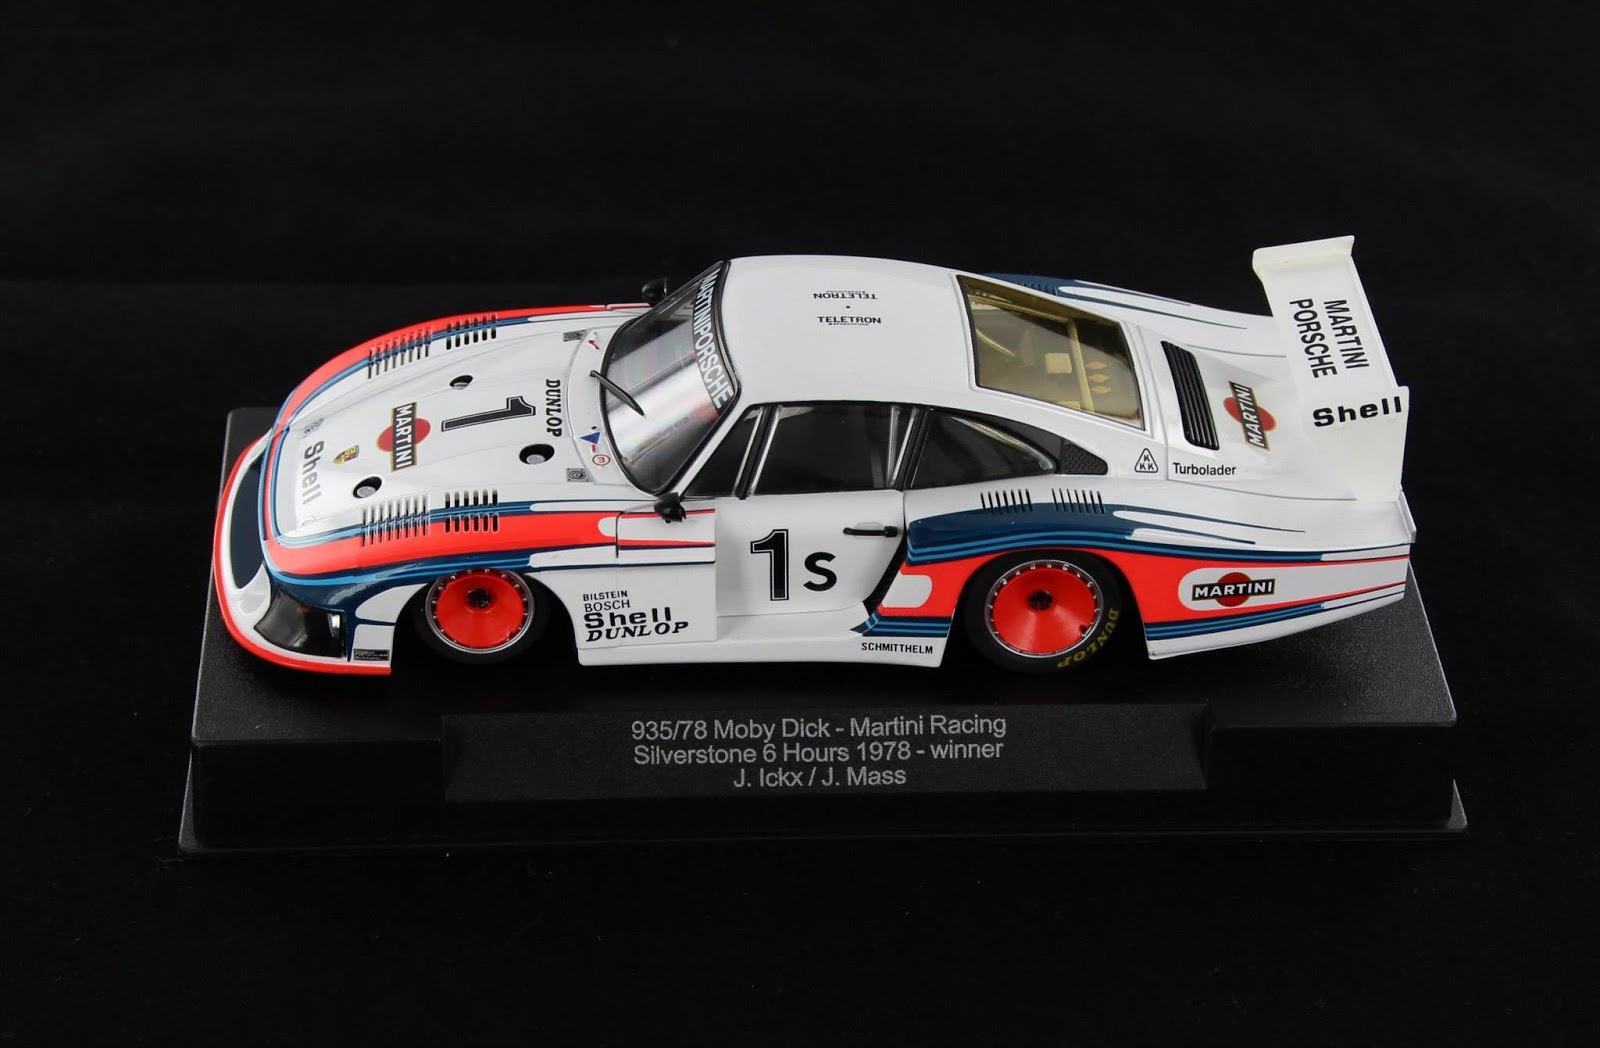 RACER SIDEWAYS PORSCHE 935/78 2014 NORTH AMERICAN CHAMPIONSHIP NEW 1/32 SLOT CAR